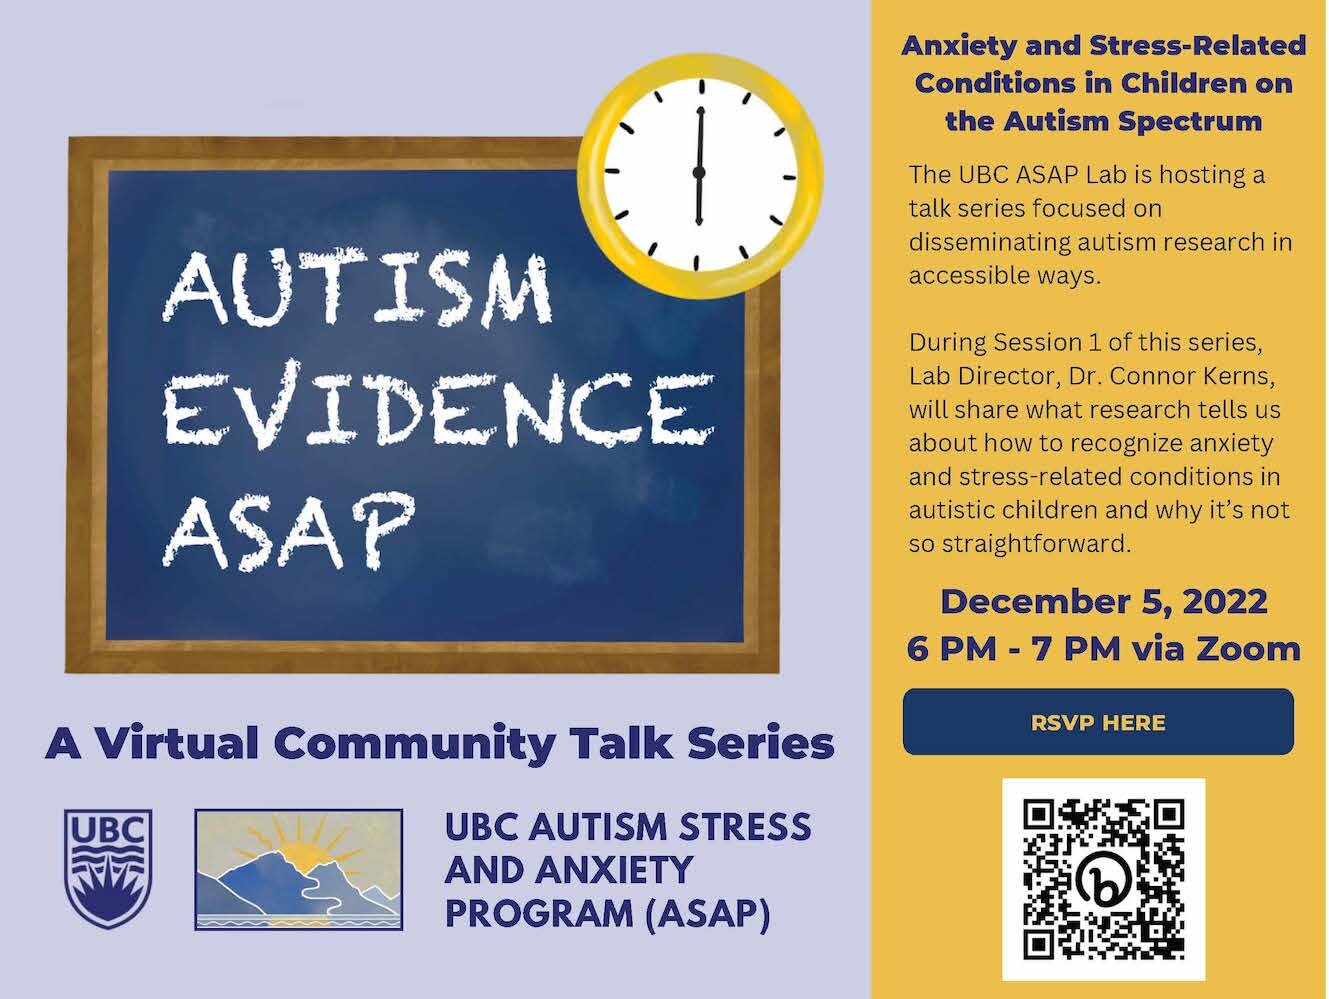 Autism Evidence ASAP: A Community Talk Series